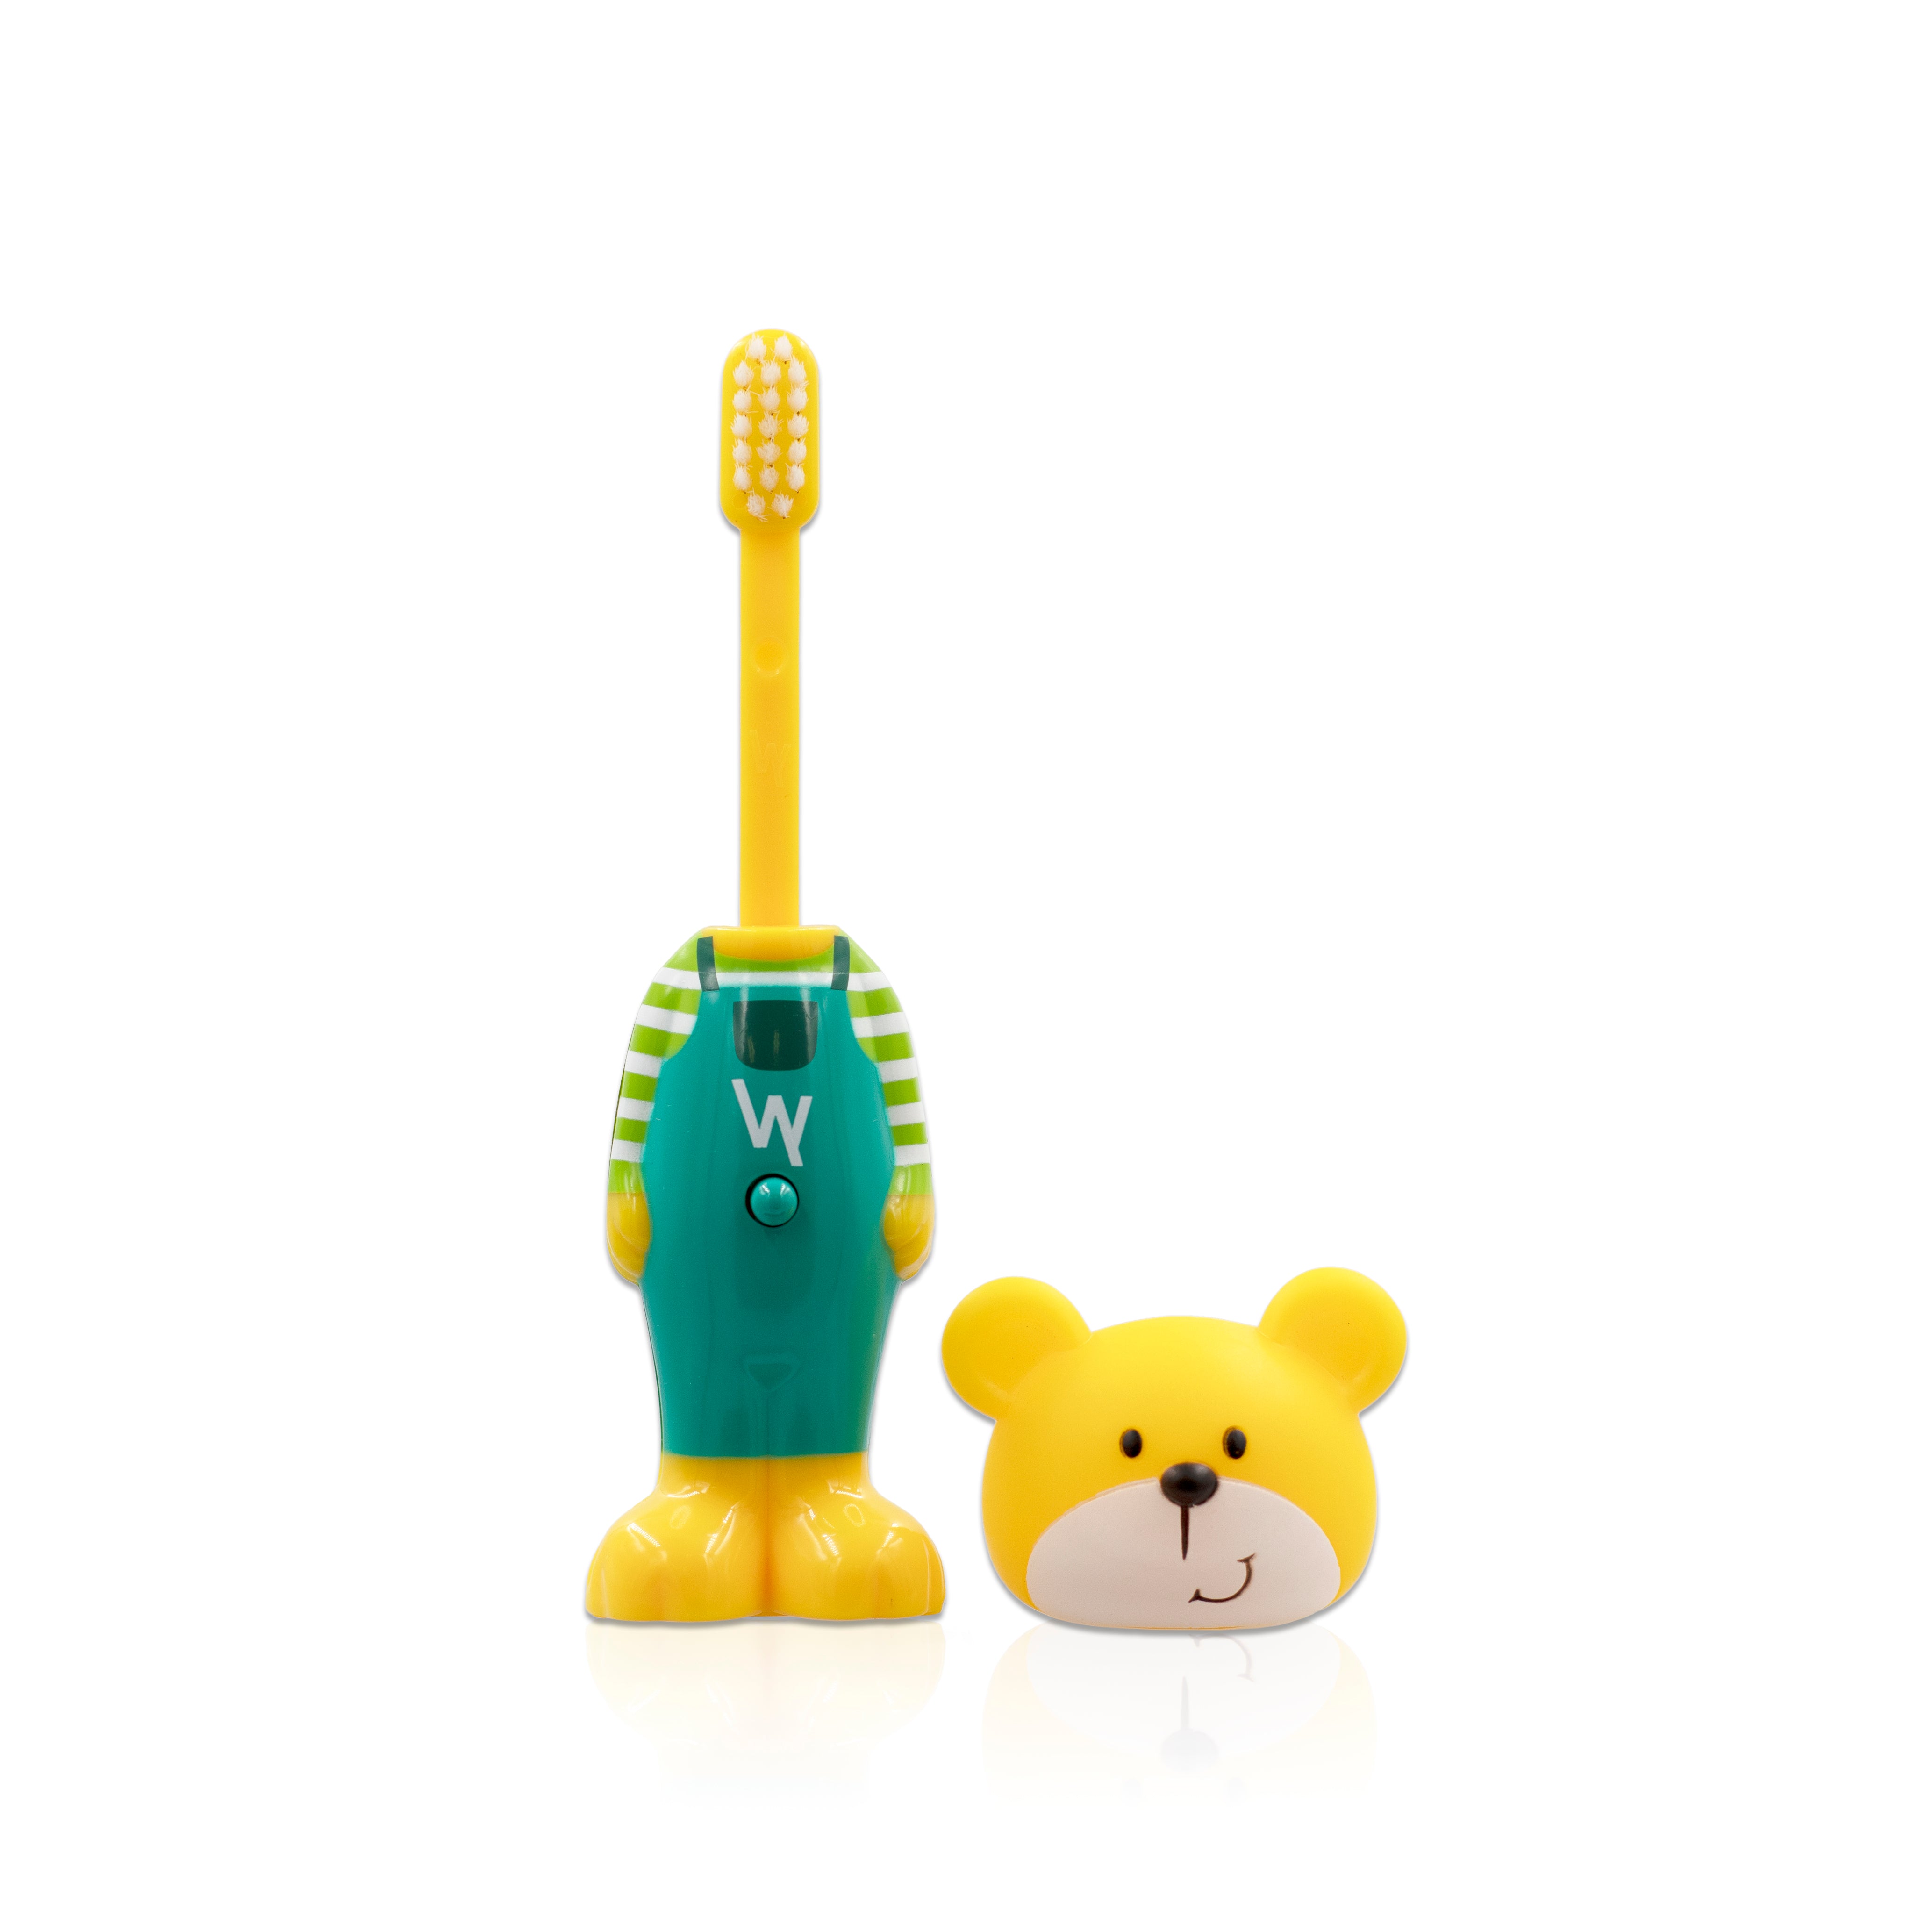 BrushCare Kids Pop-Up Extra Soft Toothbrush